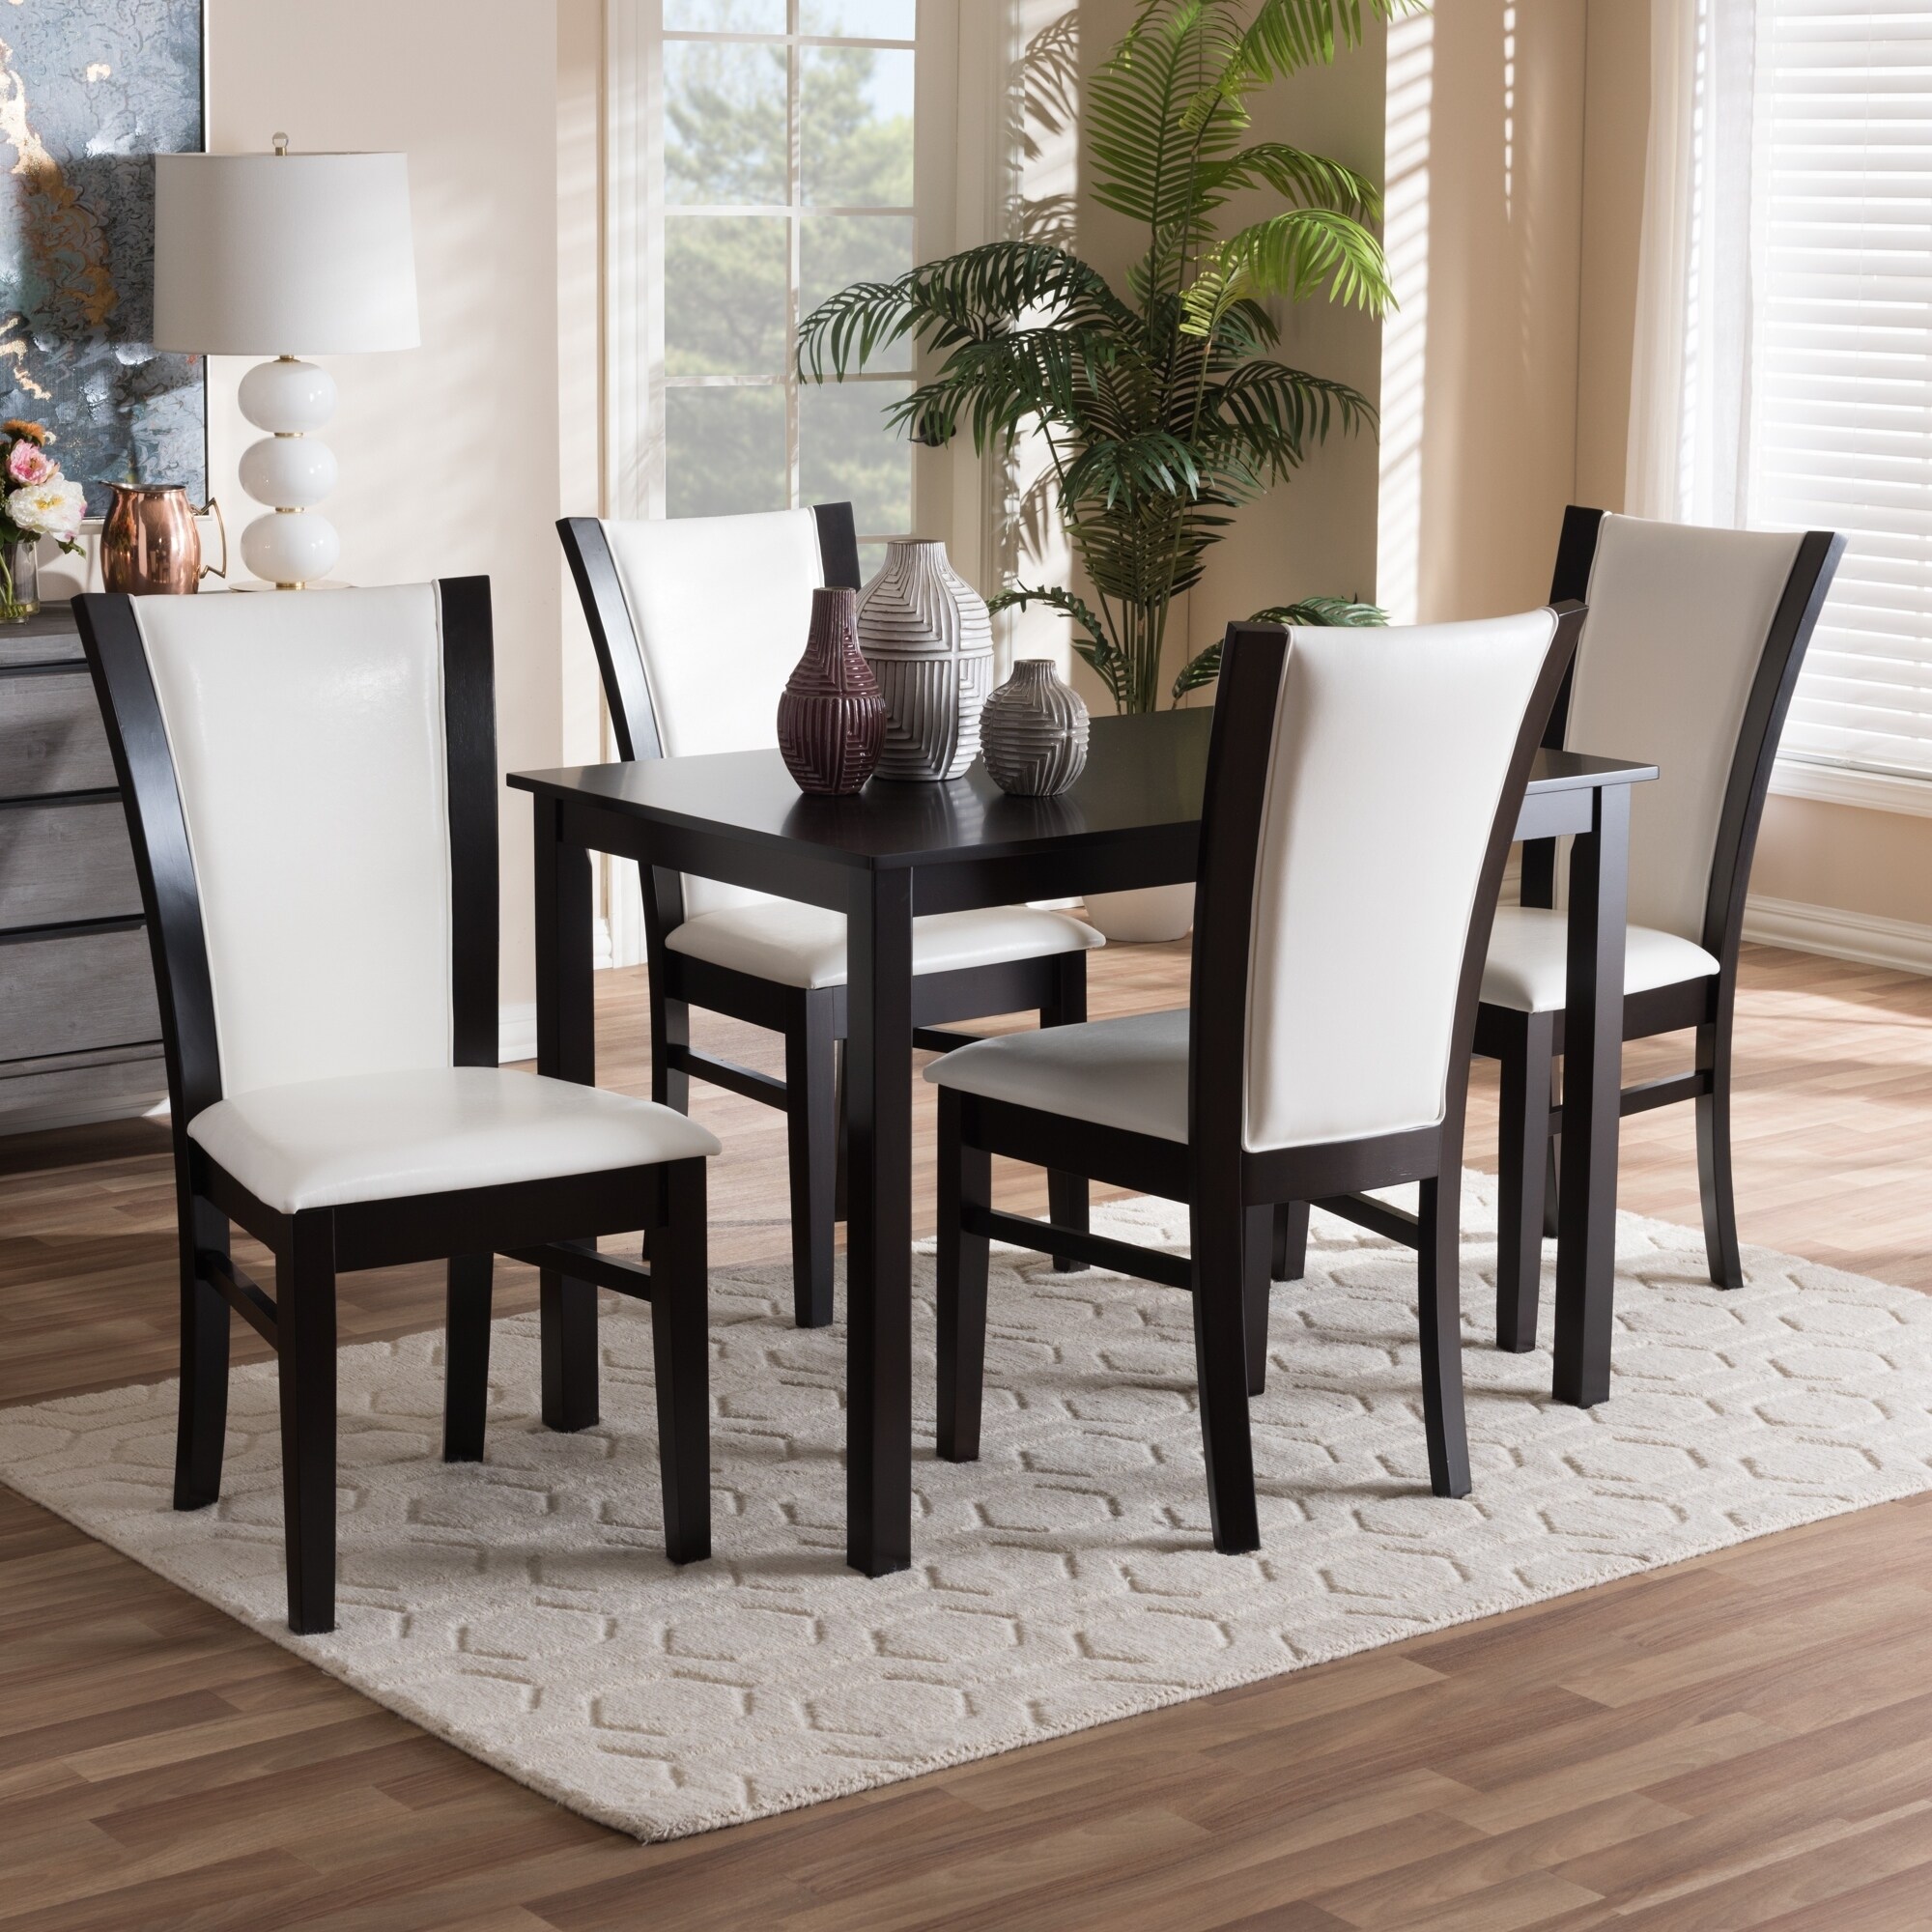 Производитель обеденных столов. Contemporary 5 piece Dining Set Espresso. Modern Faux Leather Dining Chairs Set by shopc.